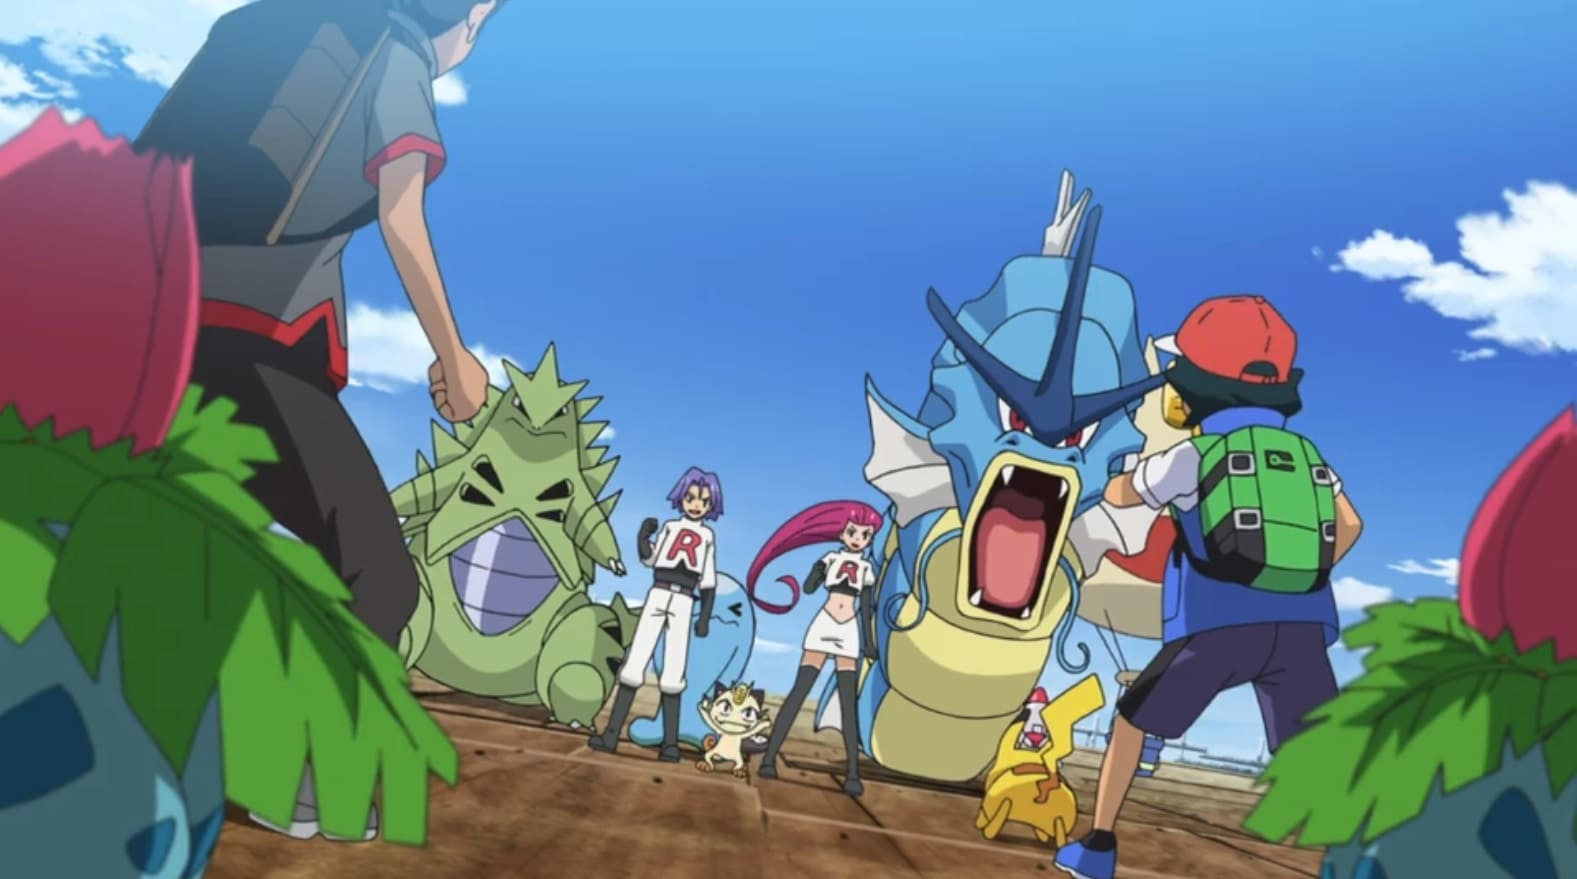 Pikachu destruyéndolos a todos - Episodio 3 - Pokemon Unite 